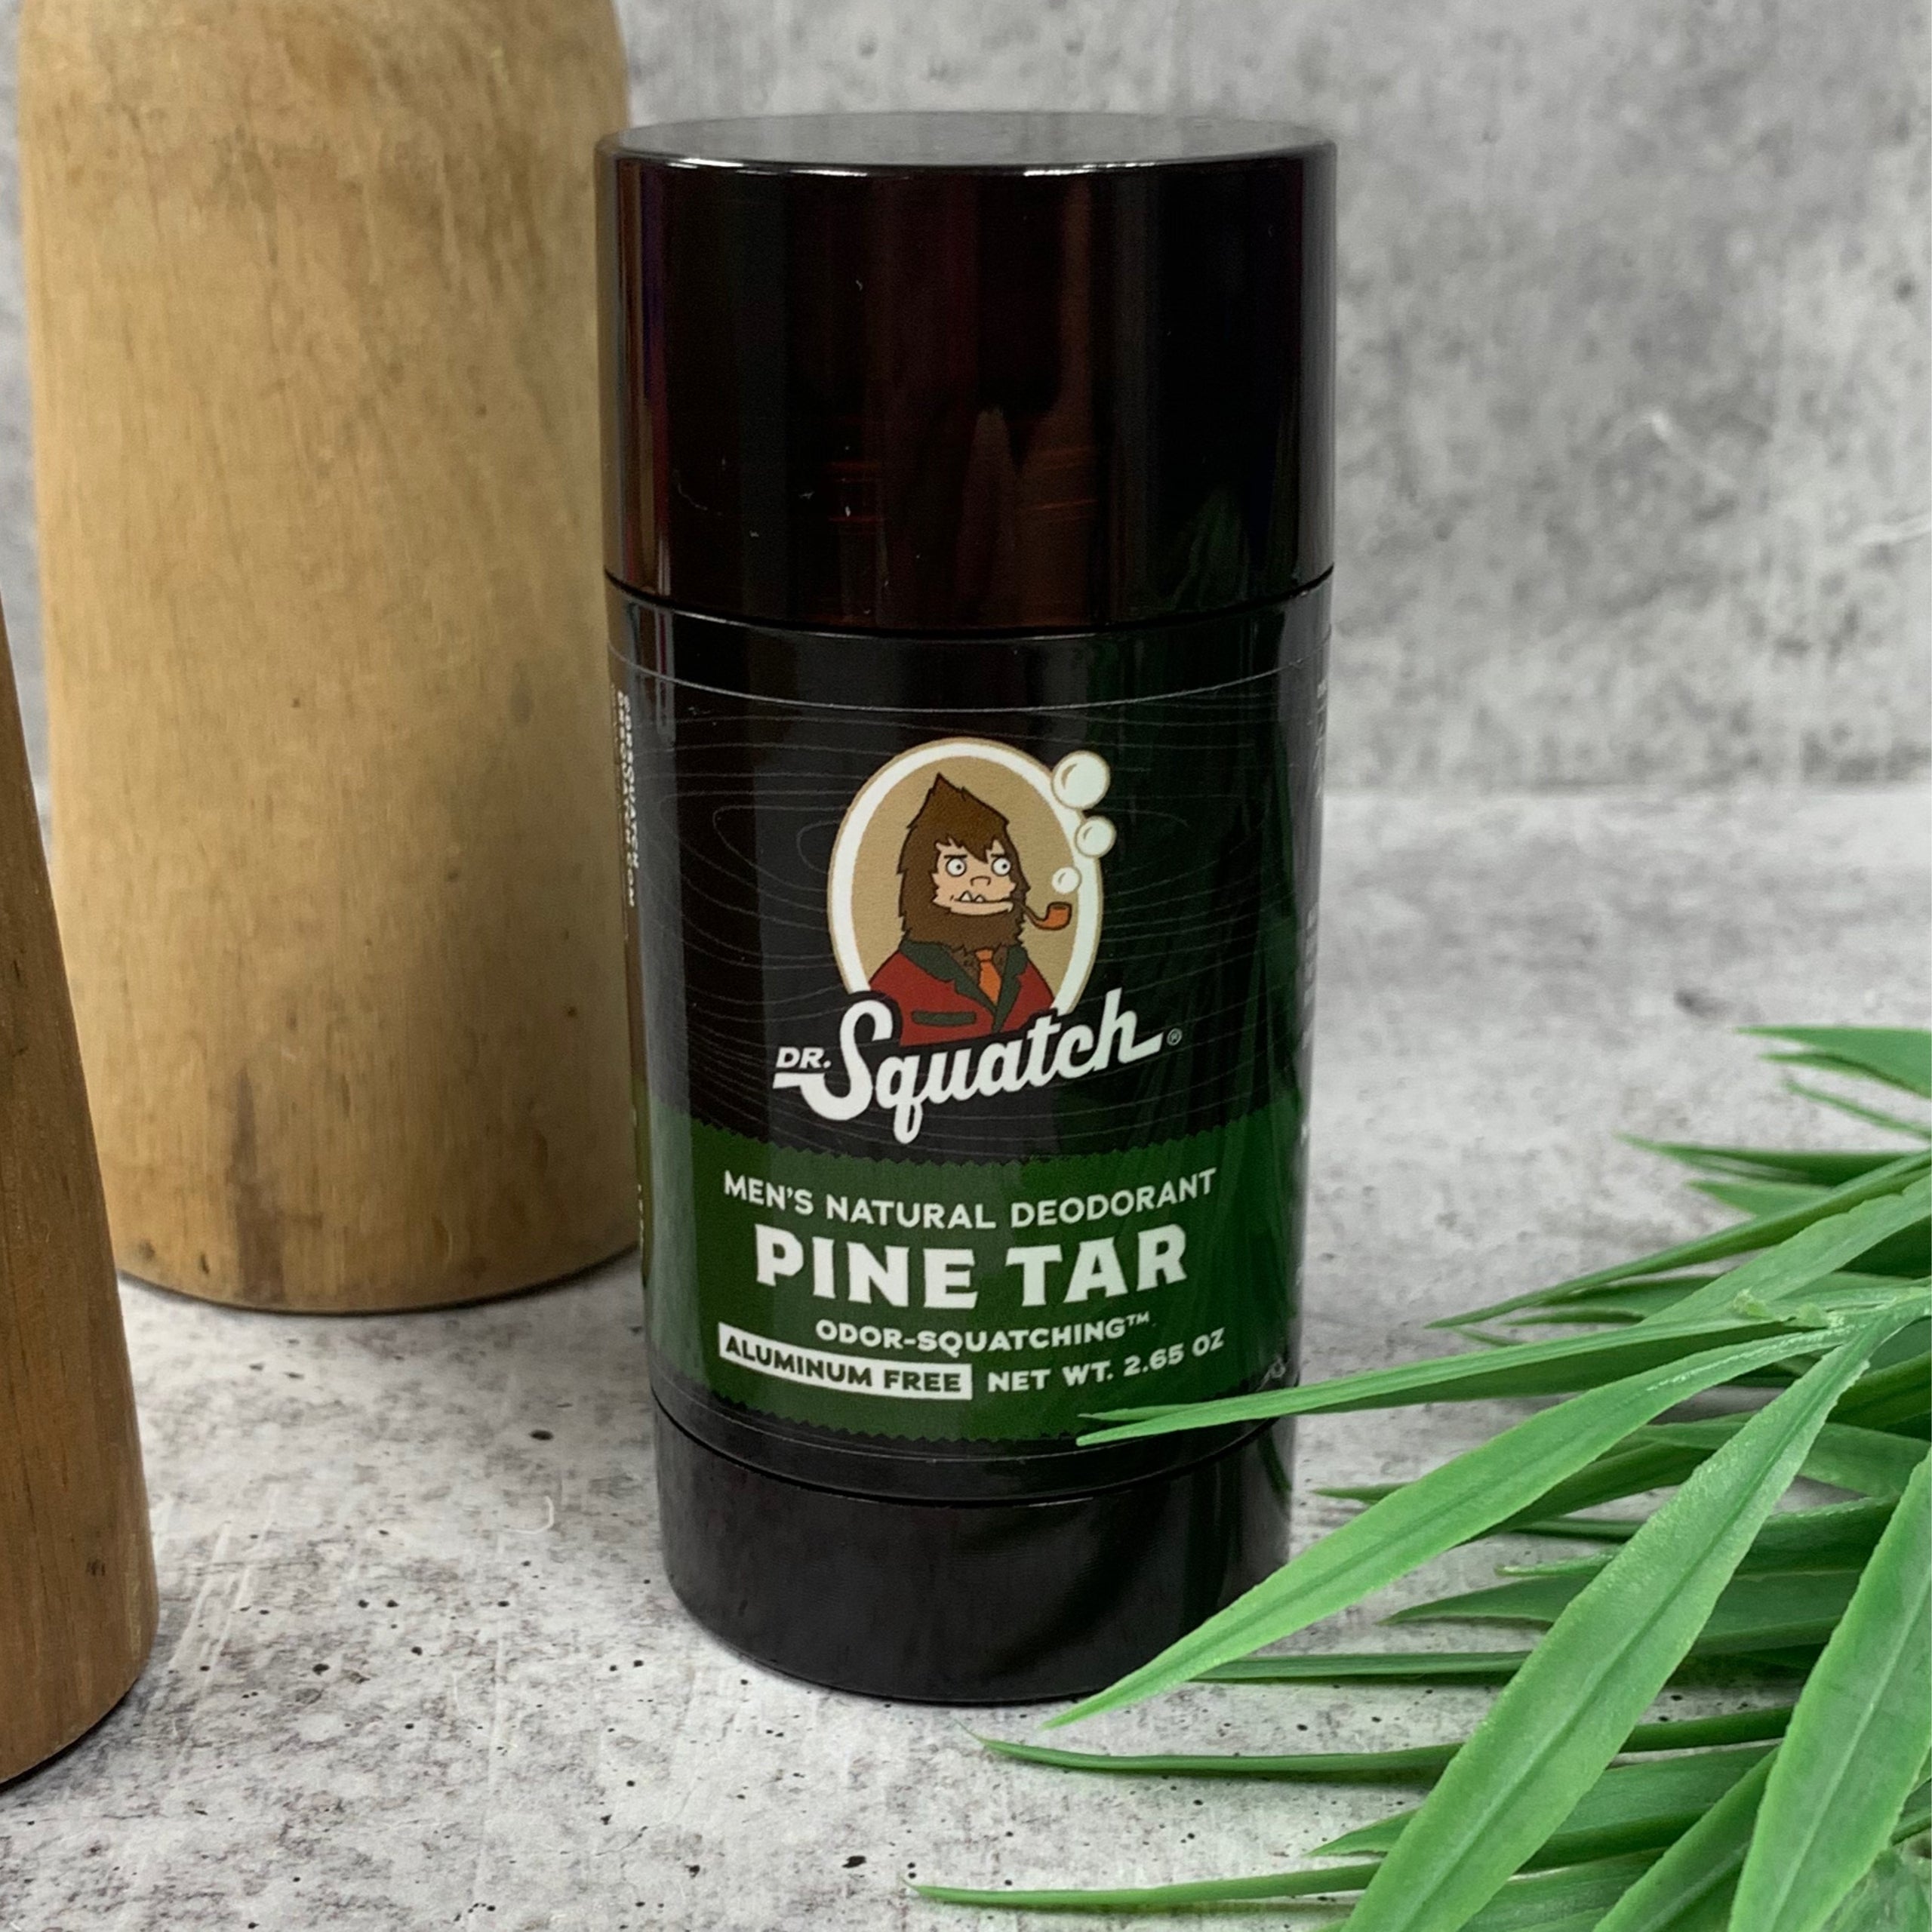 Dr. Squatch Pine Tar Natural Deodorant - 2.65 oz